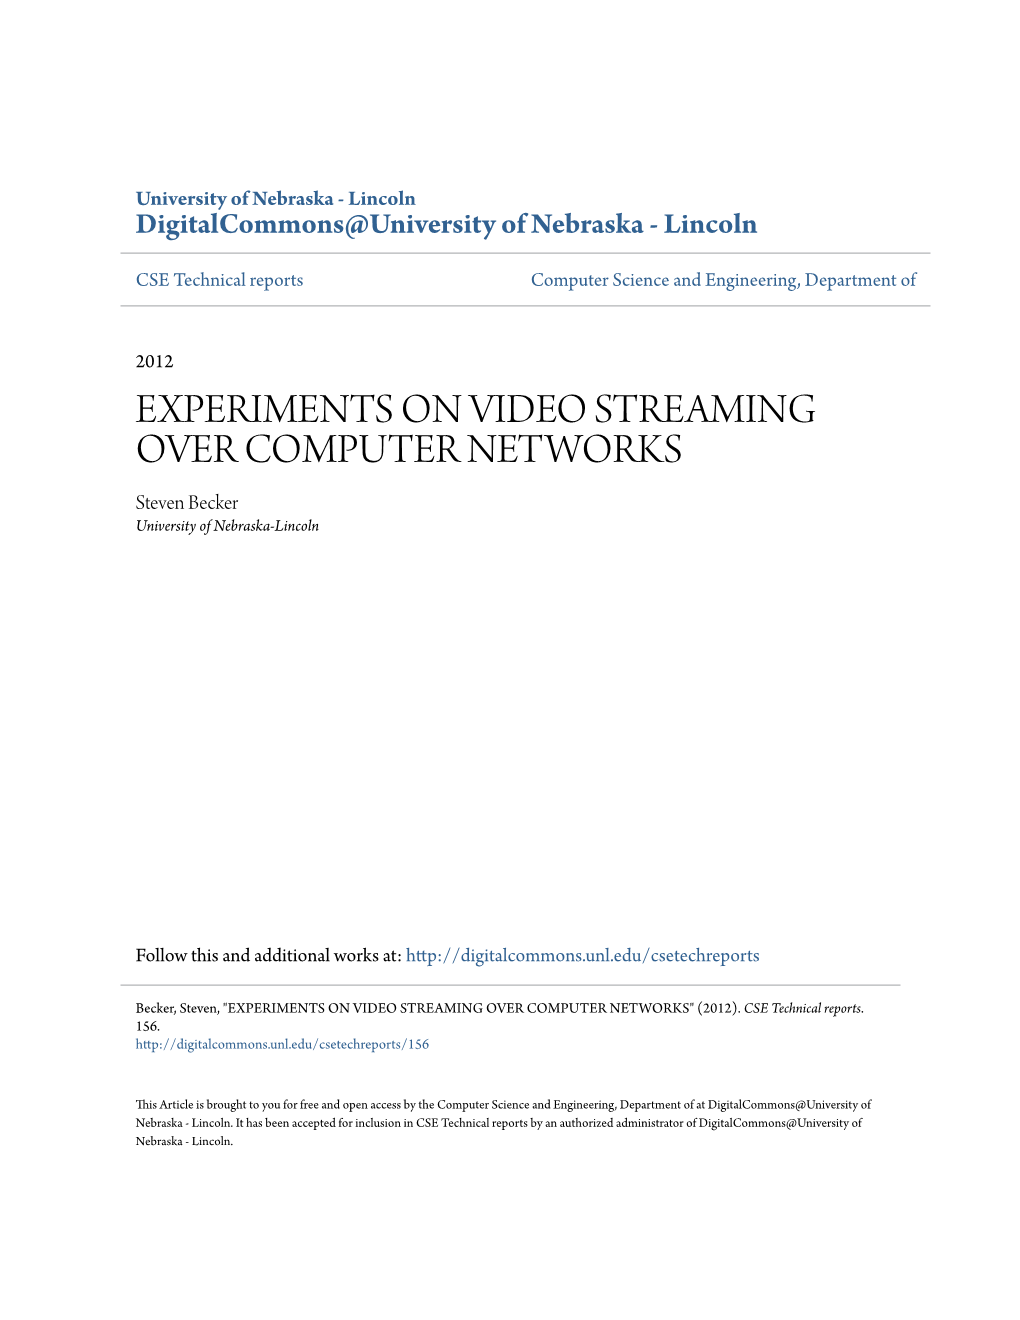 EXPERIMENTS on VIDEO STREAMING OVER COMPUTER NETWORKS Steven Becker University of Nebraska-Lincoln